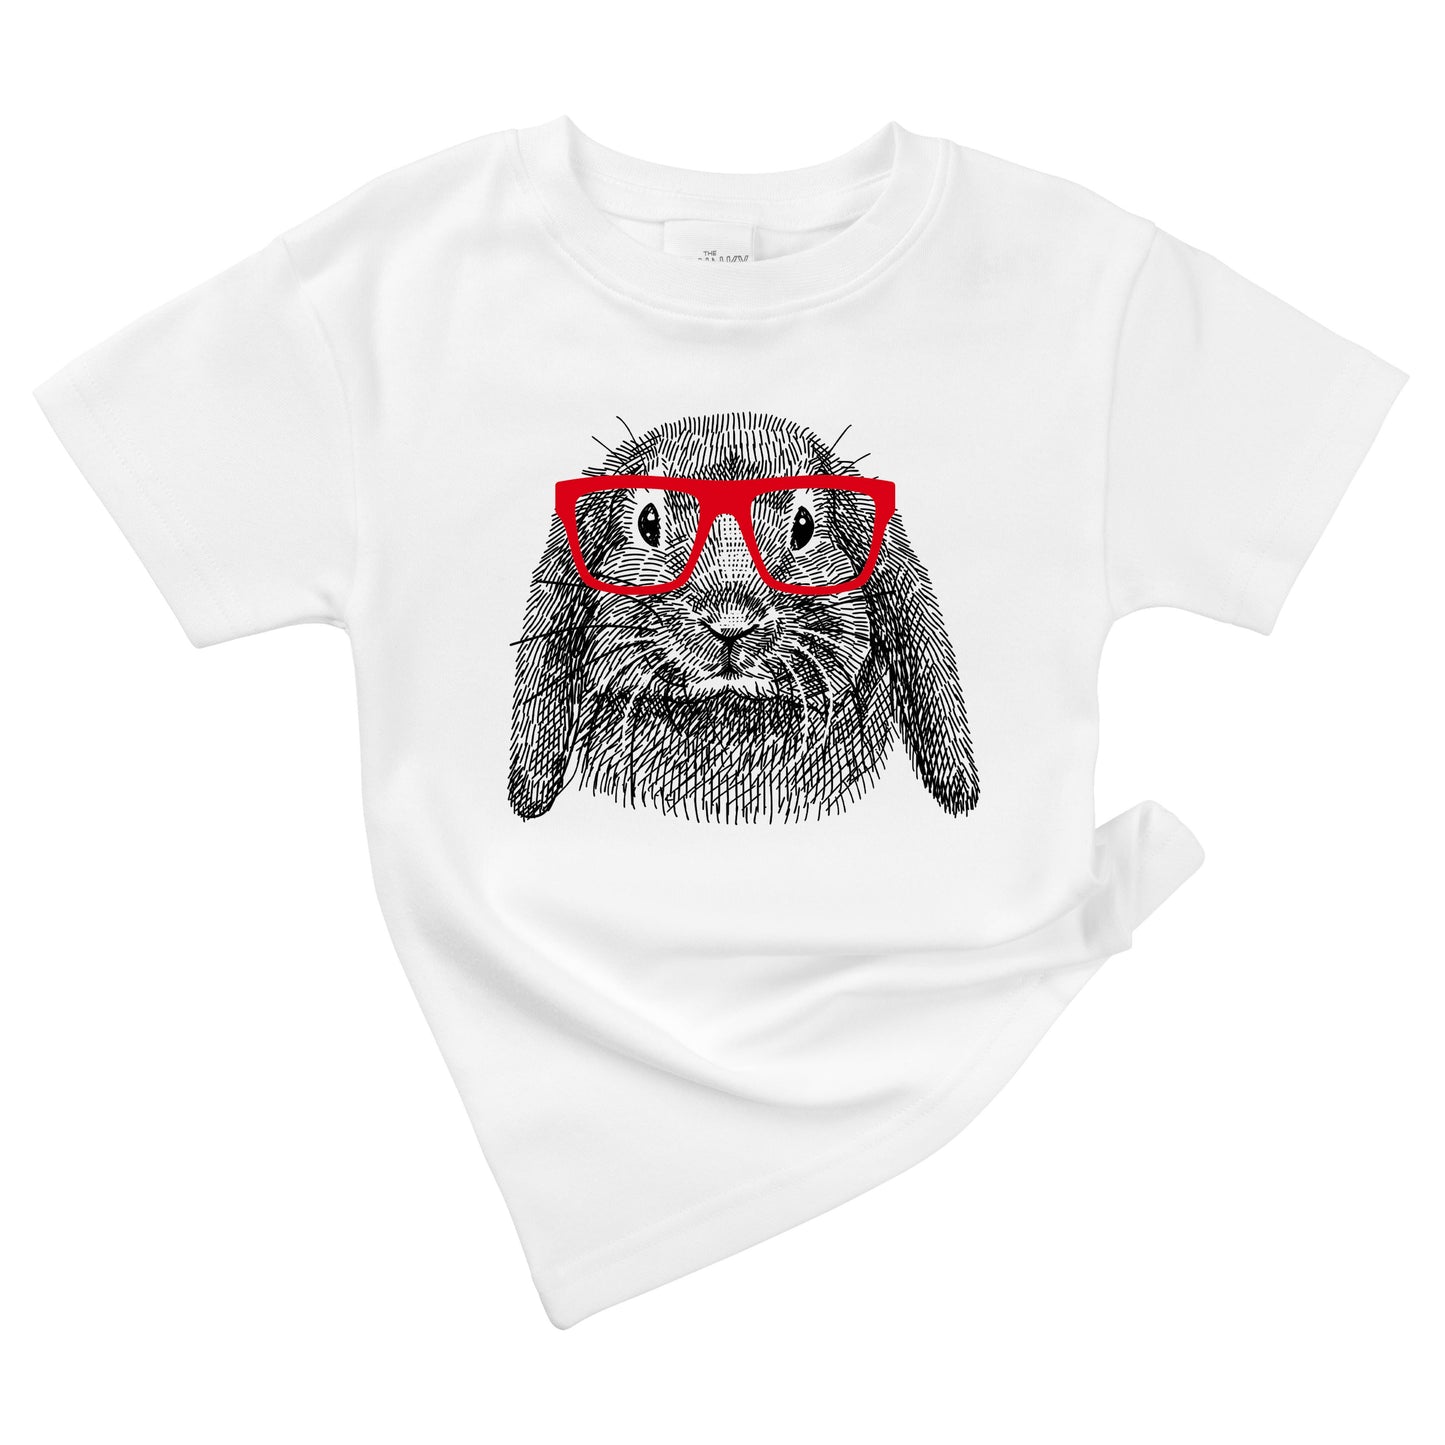 Bunny Glasses Toddler Shirt | Gray